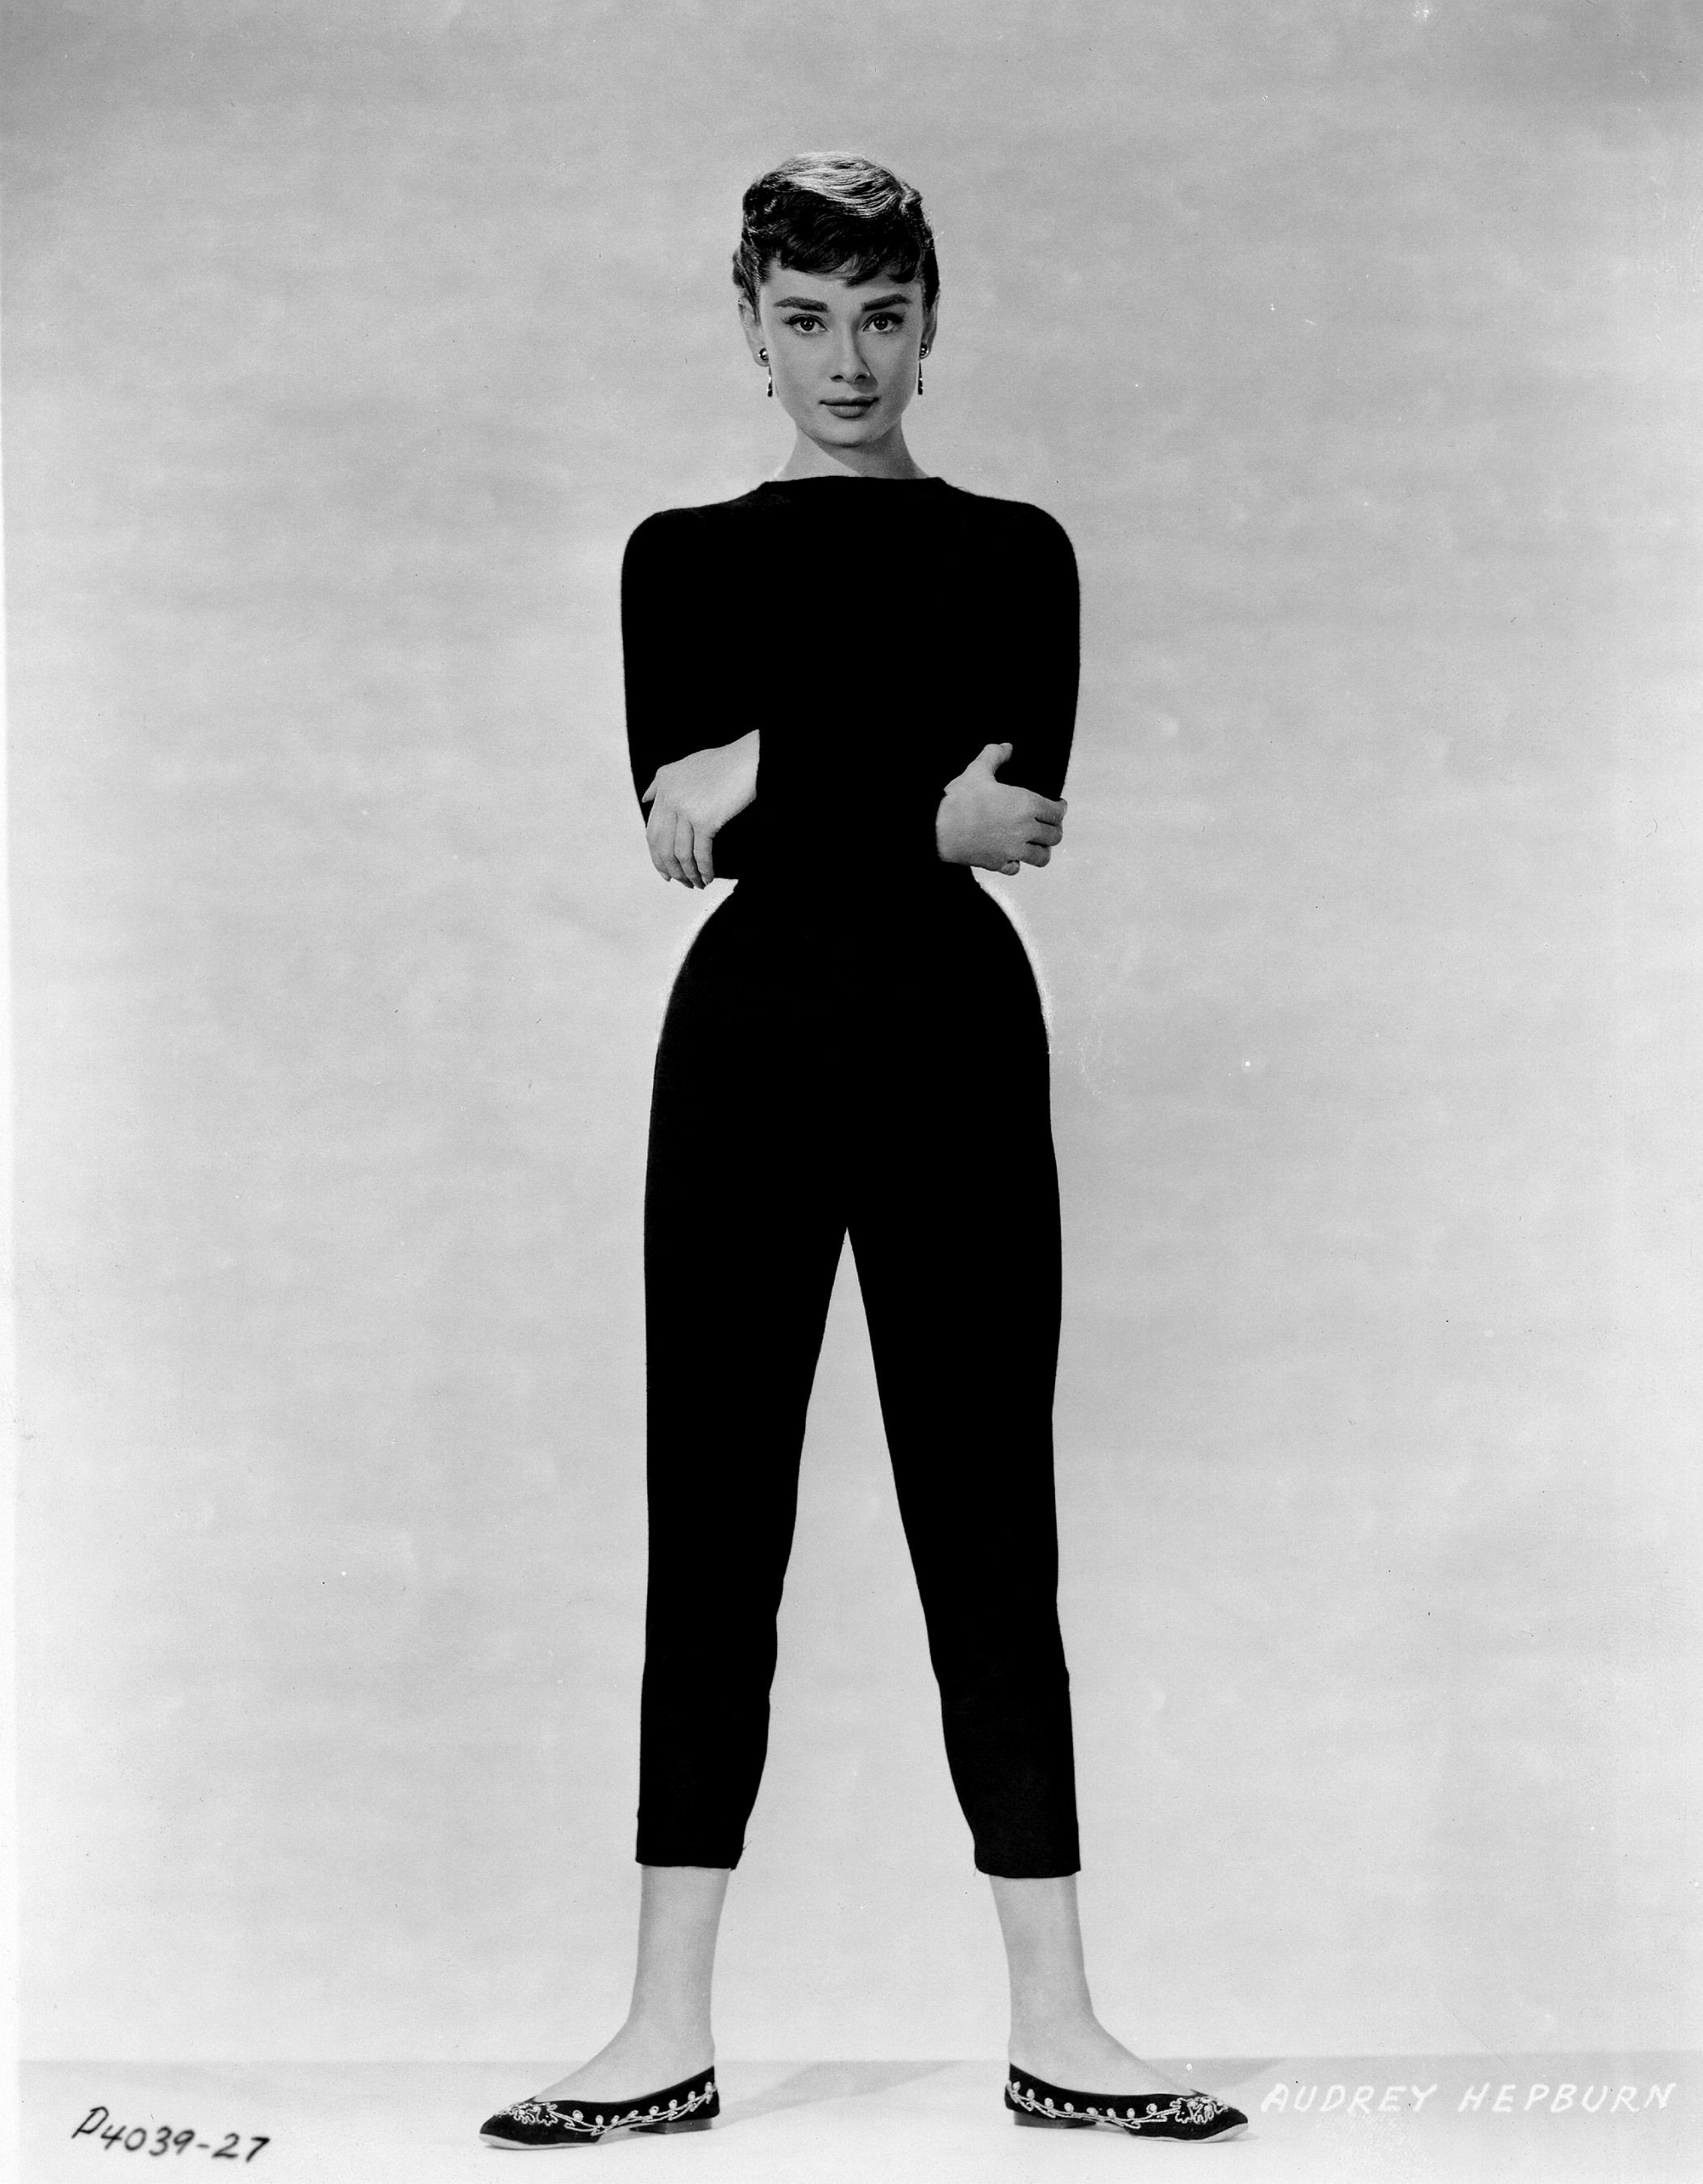 2100x2693 free Audrey Hepburn wallpaper, resolution : 2100 x tags: Audrey, Hepburn.